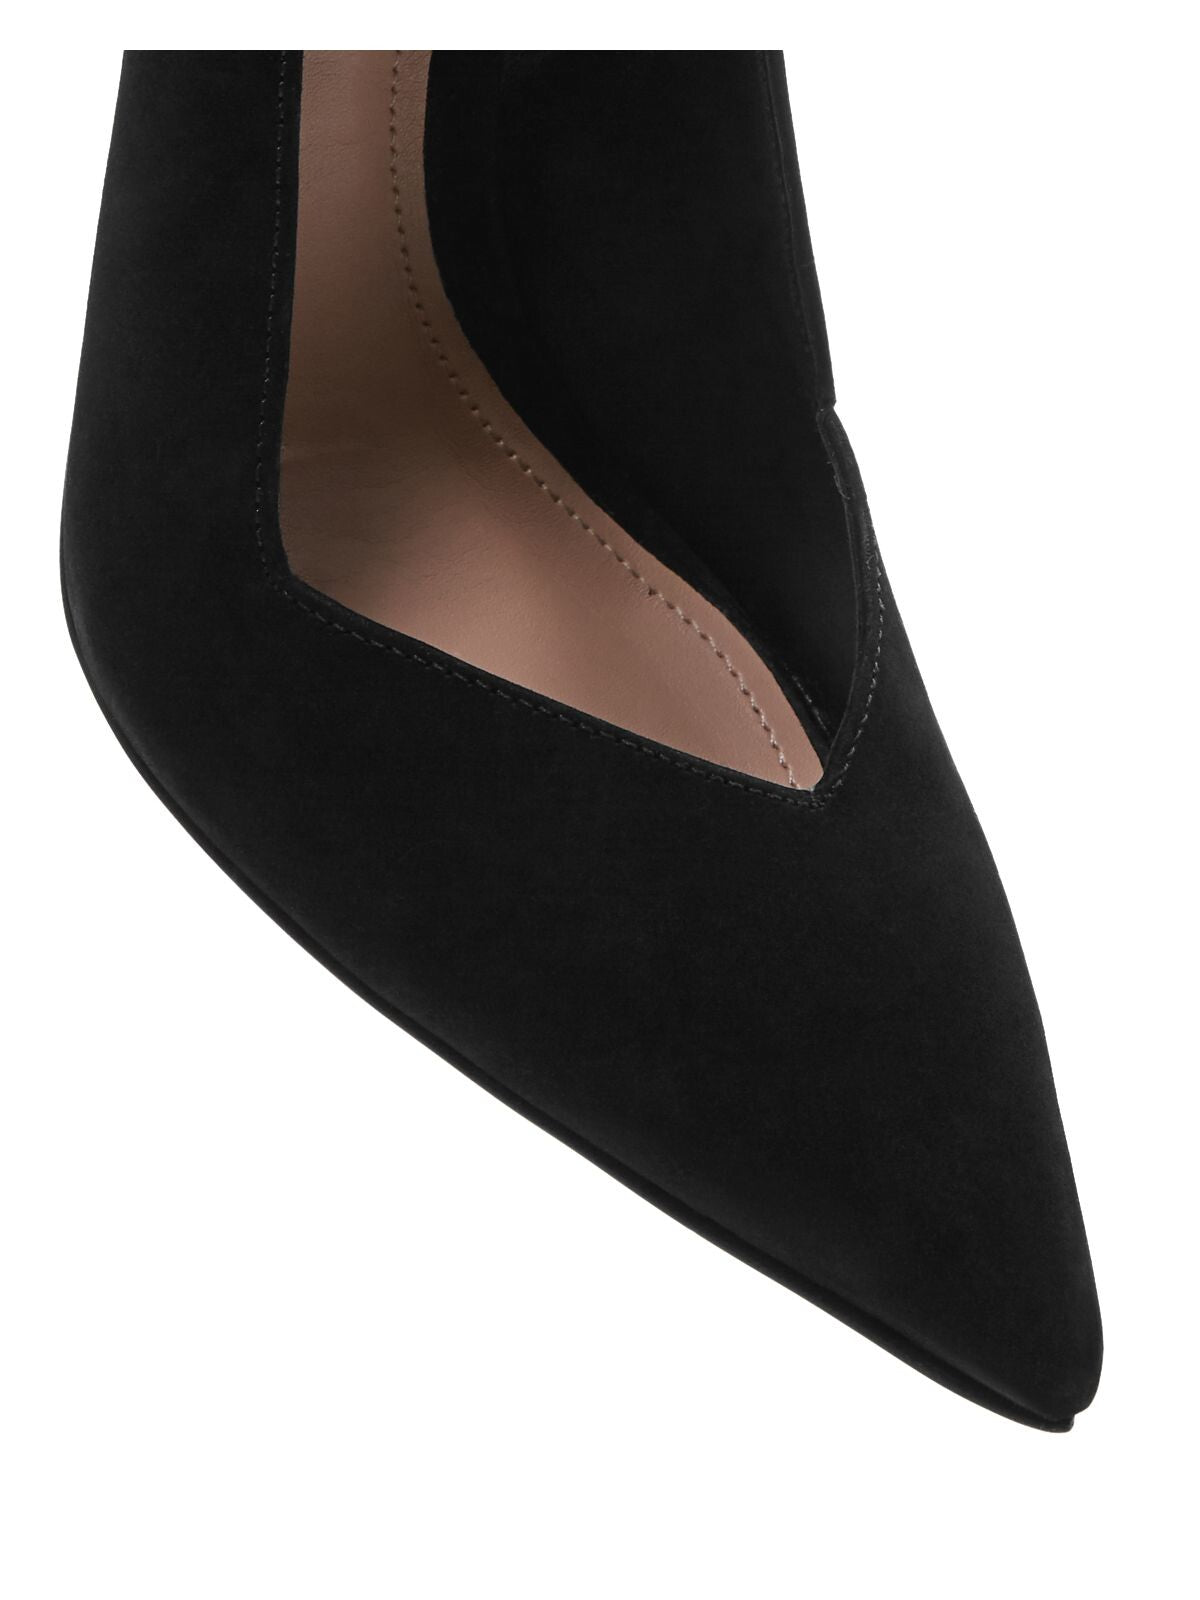 AQUA Womens Black Ankle Strap Comfort Kailana Pointed Toe Stiletto Buckle Dress Pumps Shoes B